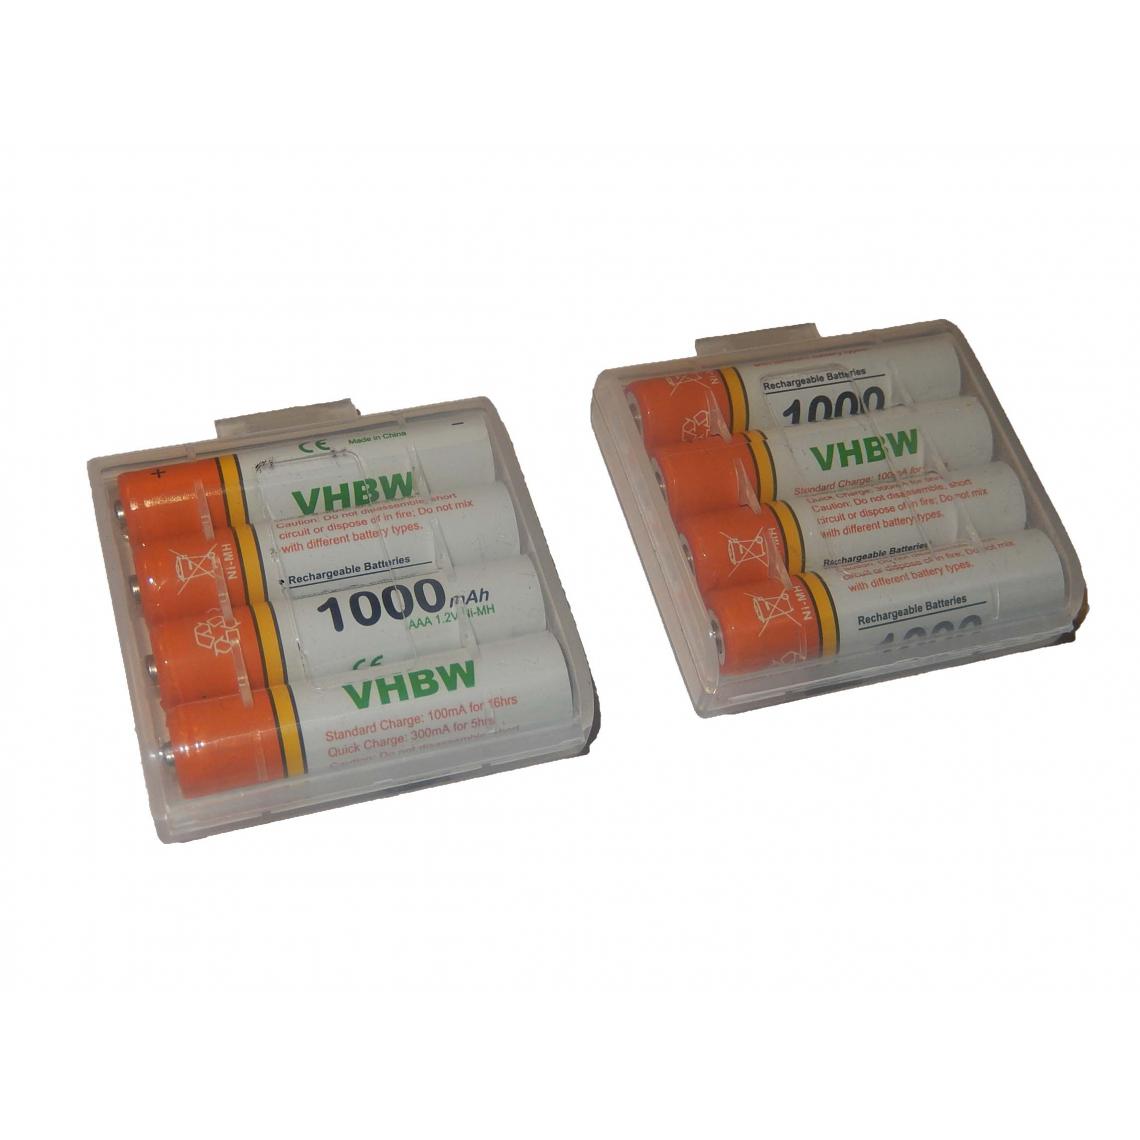 Vhbw - vhbw 8x Batteries AAA micro compatible avec Elmeg D131 DECT, D150, D150R, D151, D151R téléphone fixe sans fil (1000mAh, 1,2V, NiMH) - Autre appareil de mesure